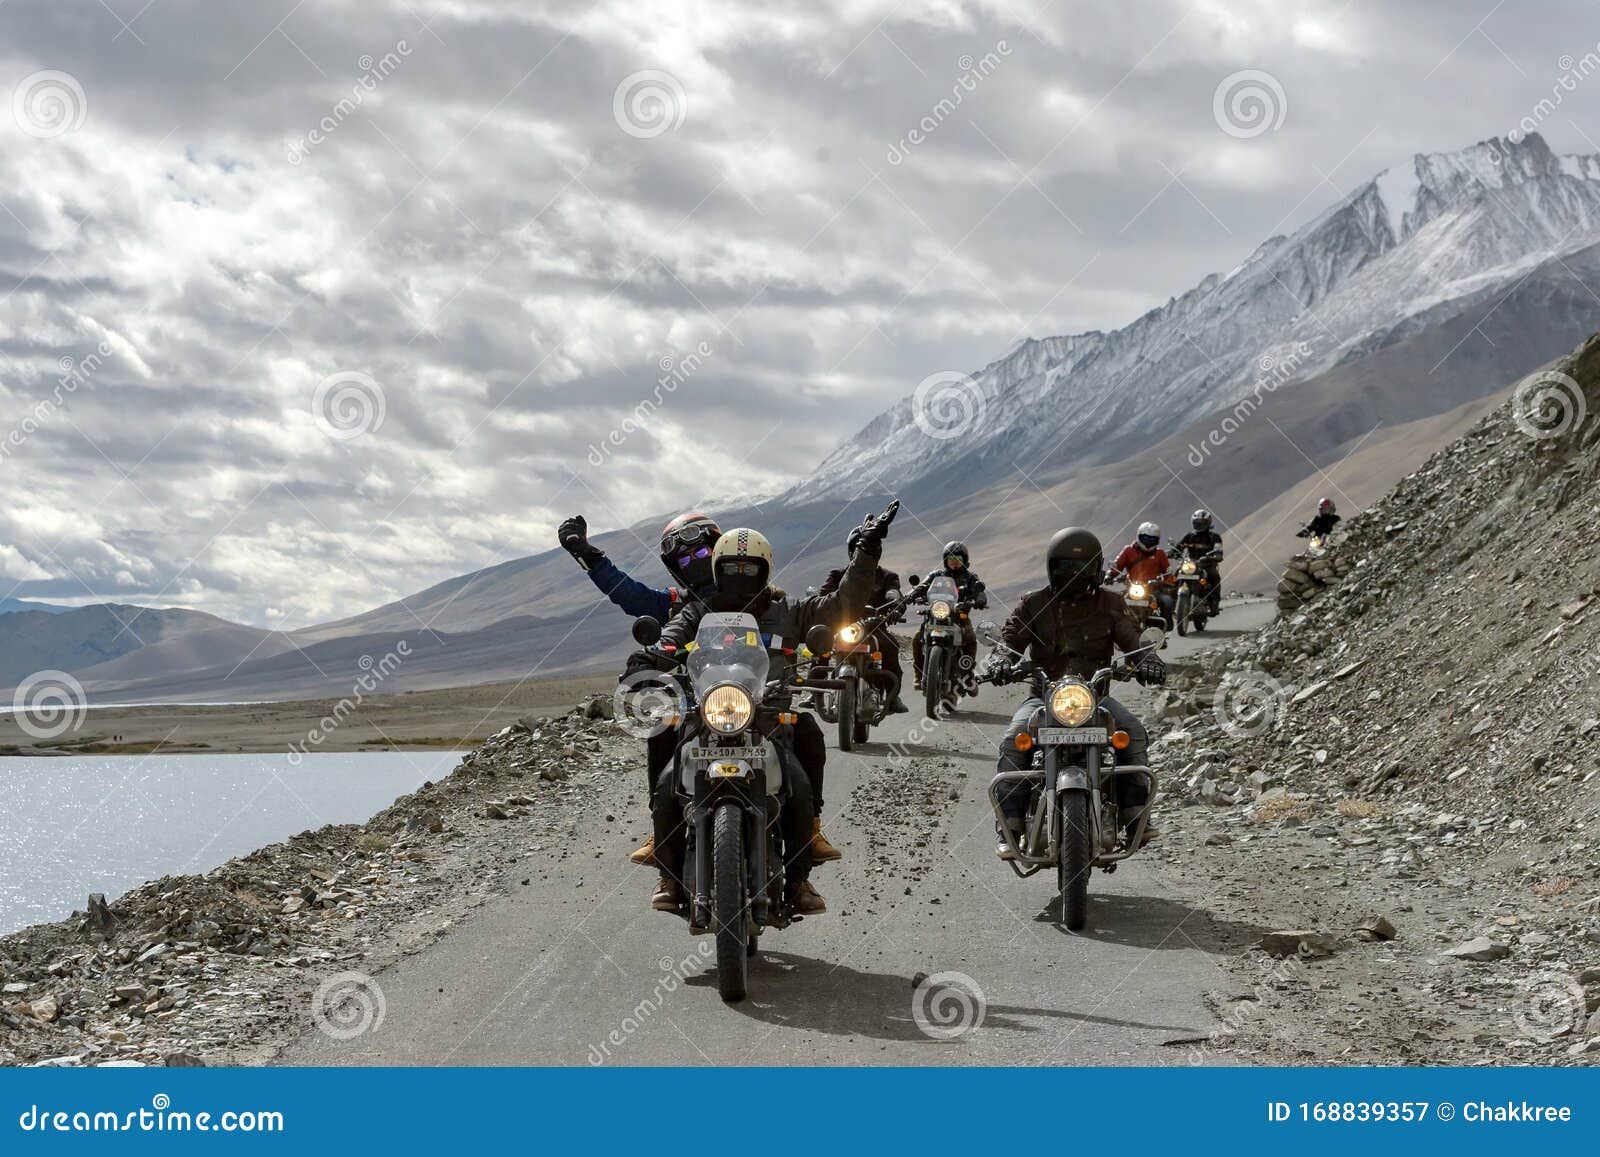 Ladakh travel - Lonely Planet | India, Asia